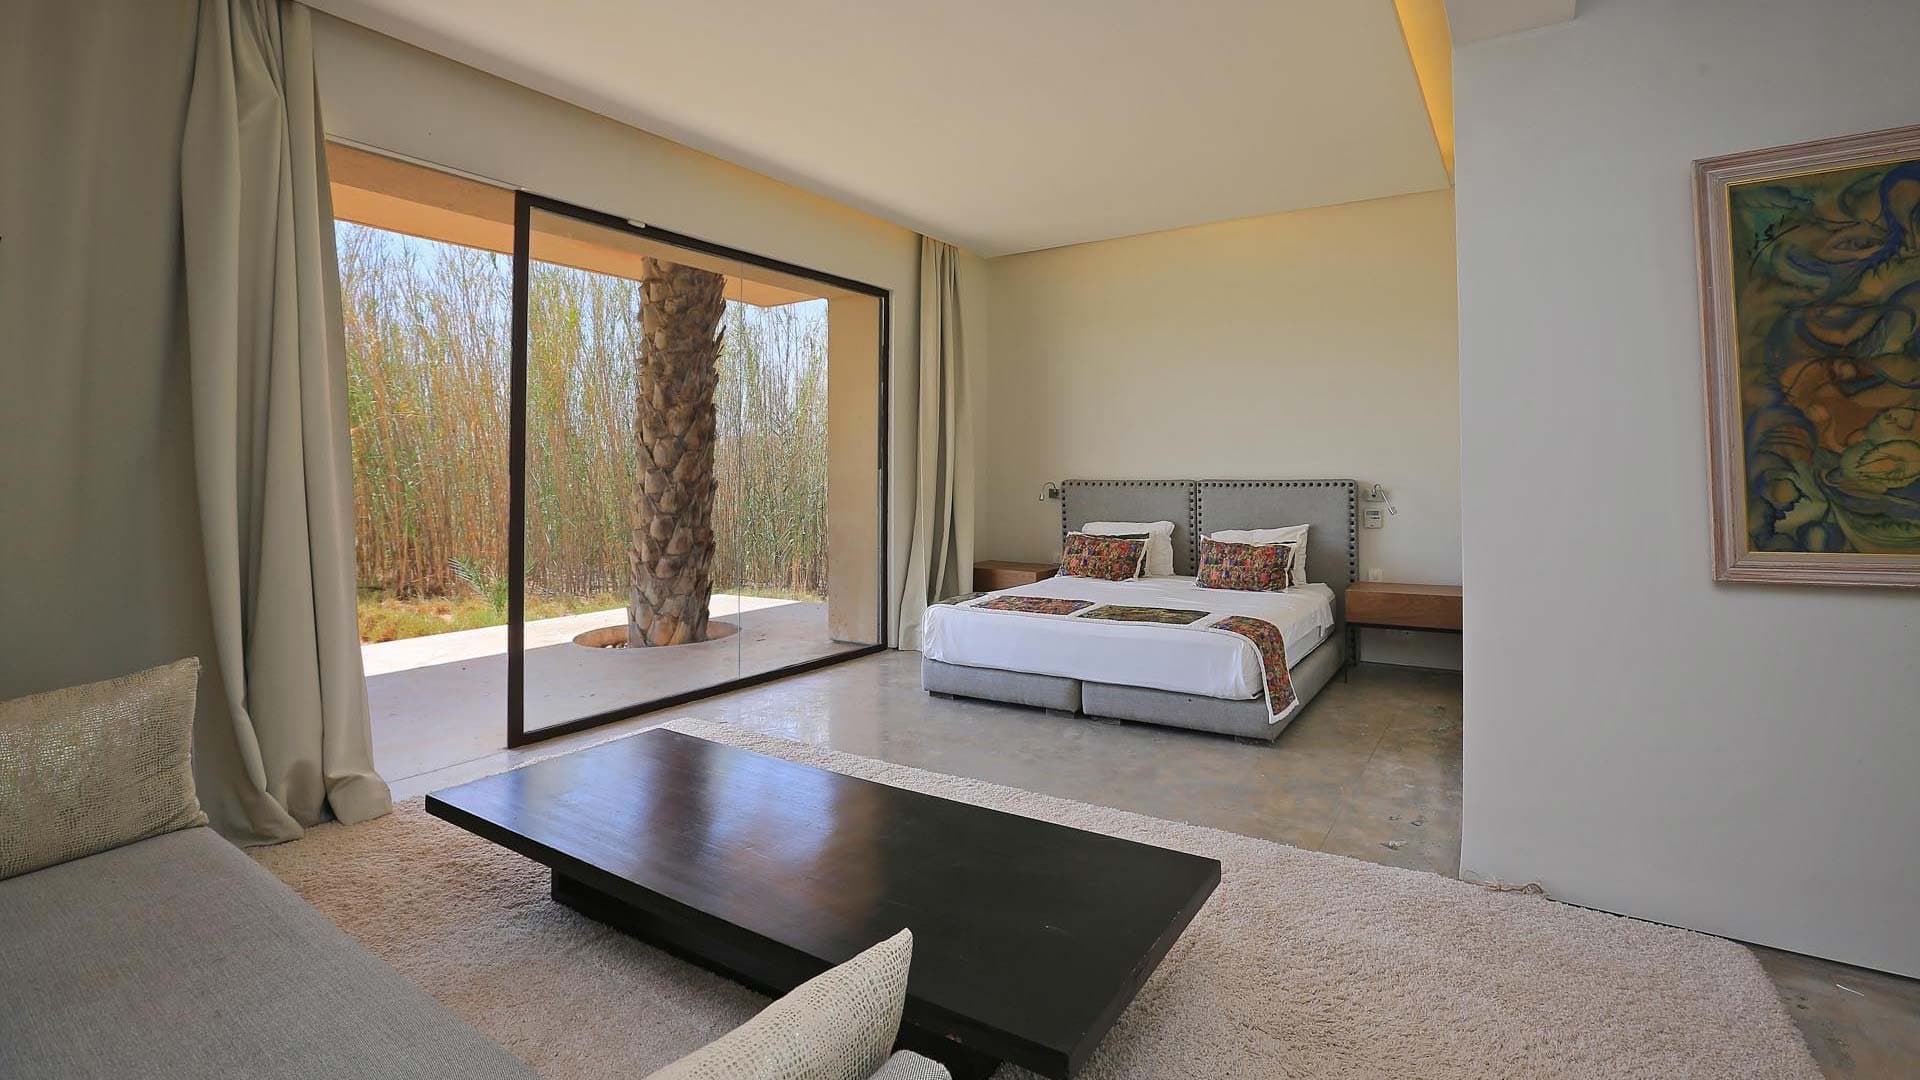 6 Bedroom Villa For Sale Marrakech Lp08713 B1503212b931280.jpg